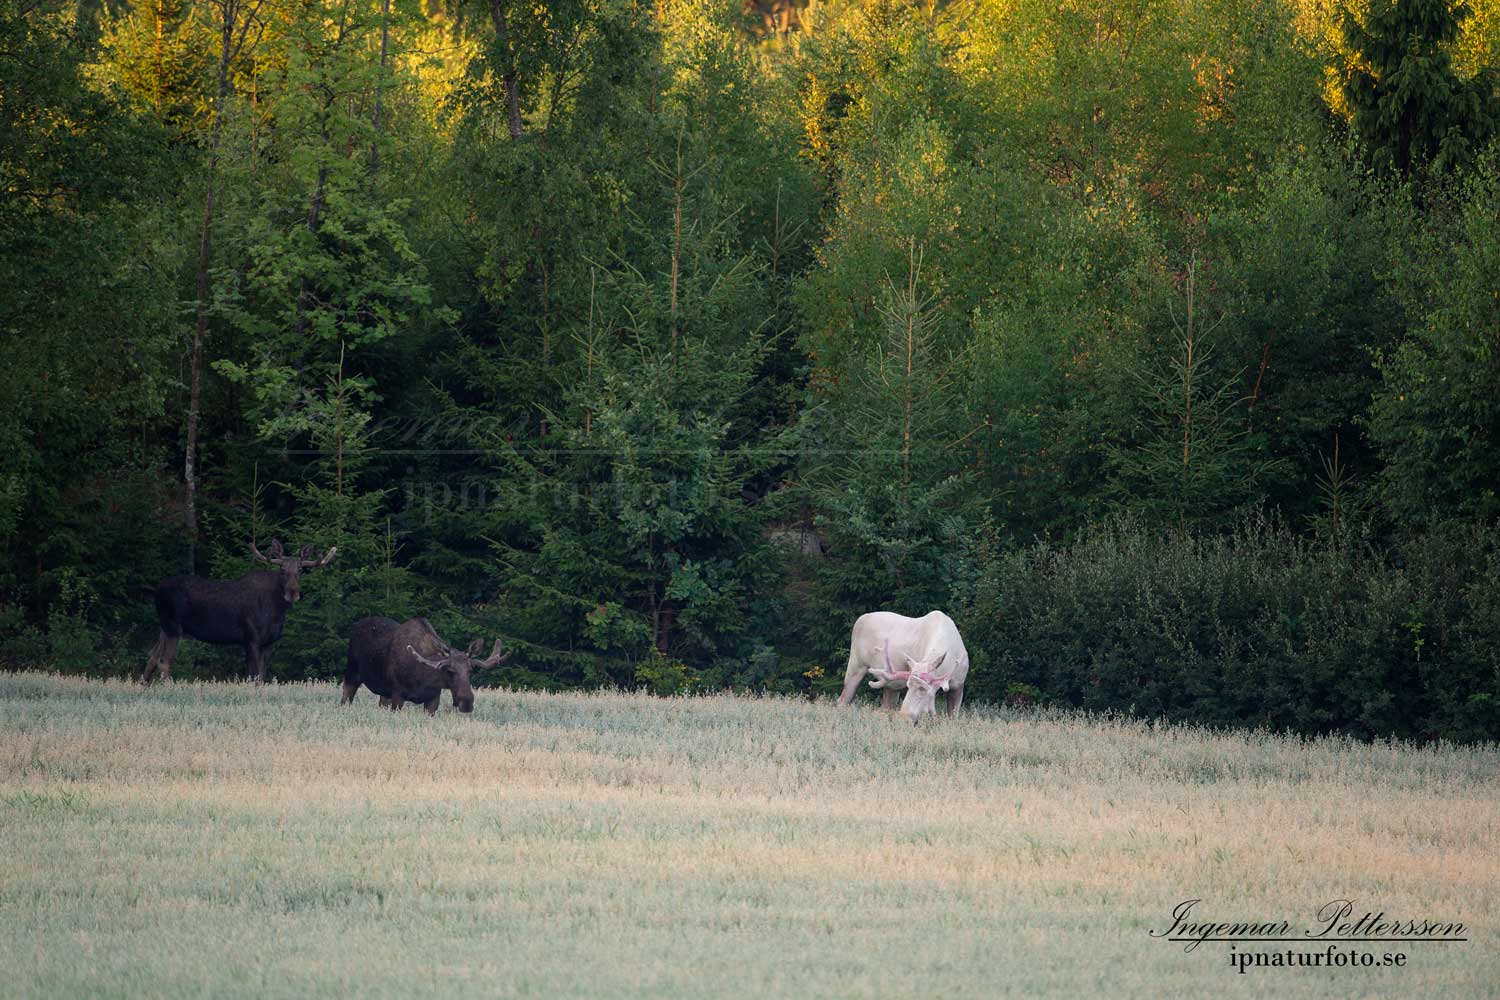 vit_alg_unicorn_white_moose_weißer_Elch_Sverige_naturfoto_ipnaturfoto_se_va431